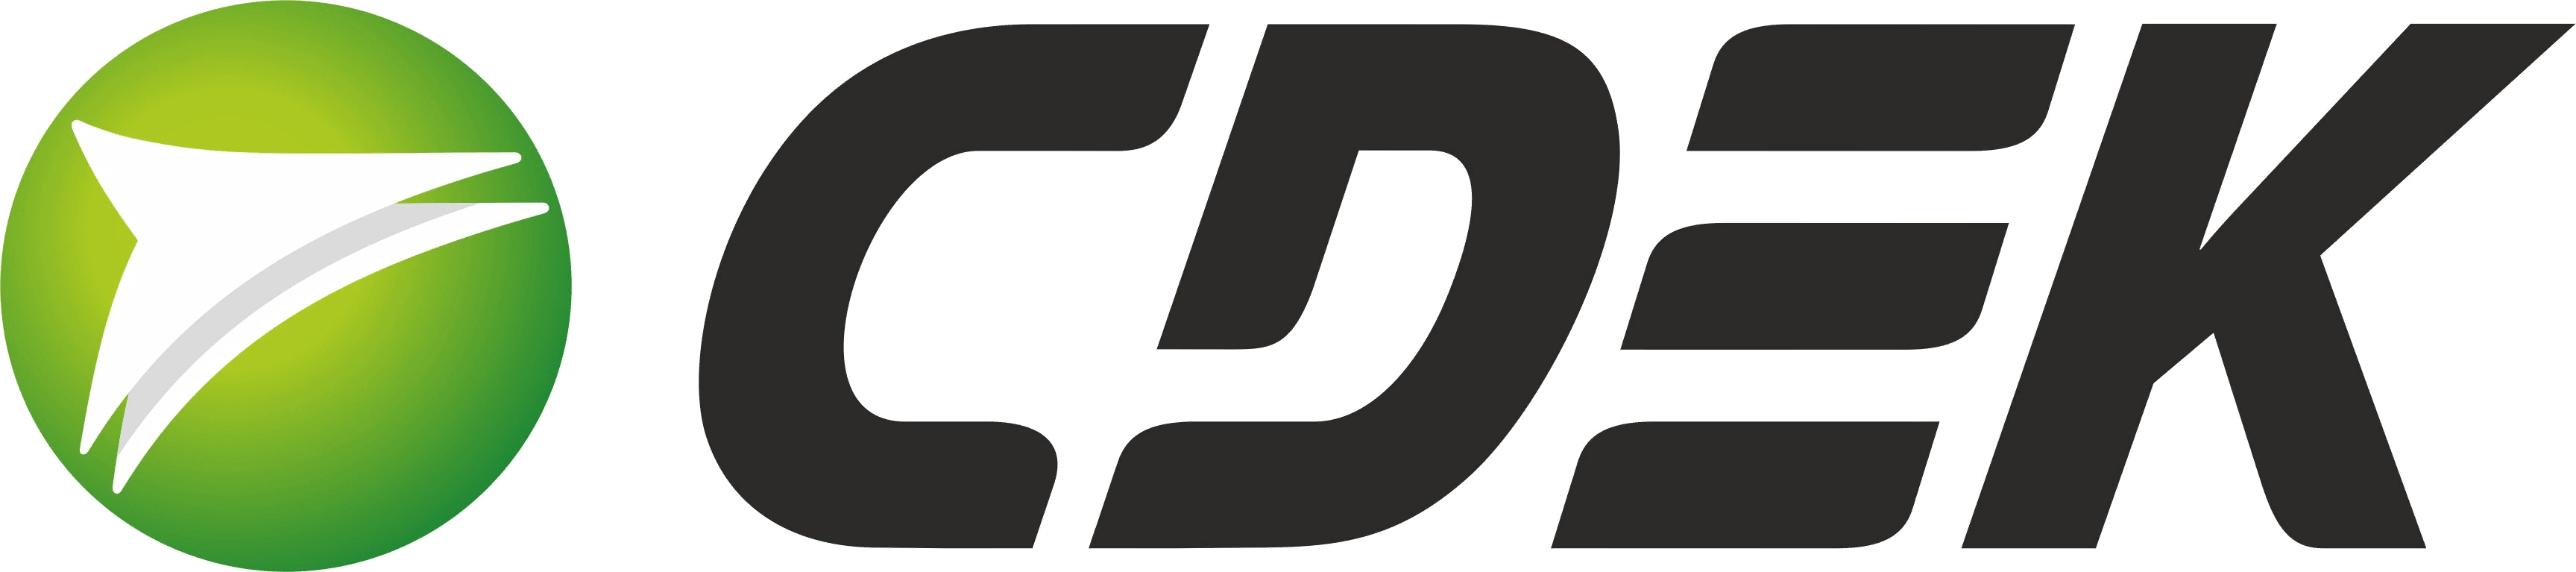 Транспортная компания СДЭК лого